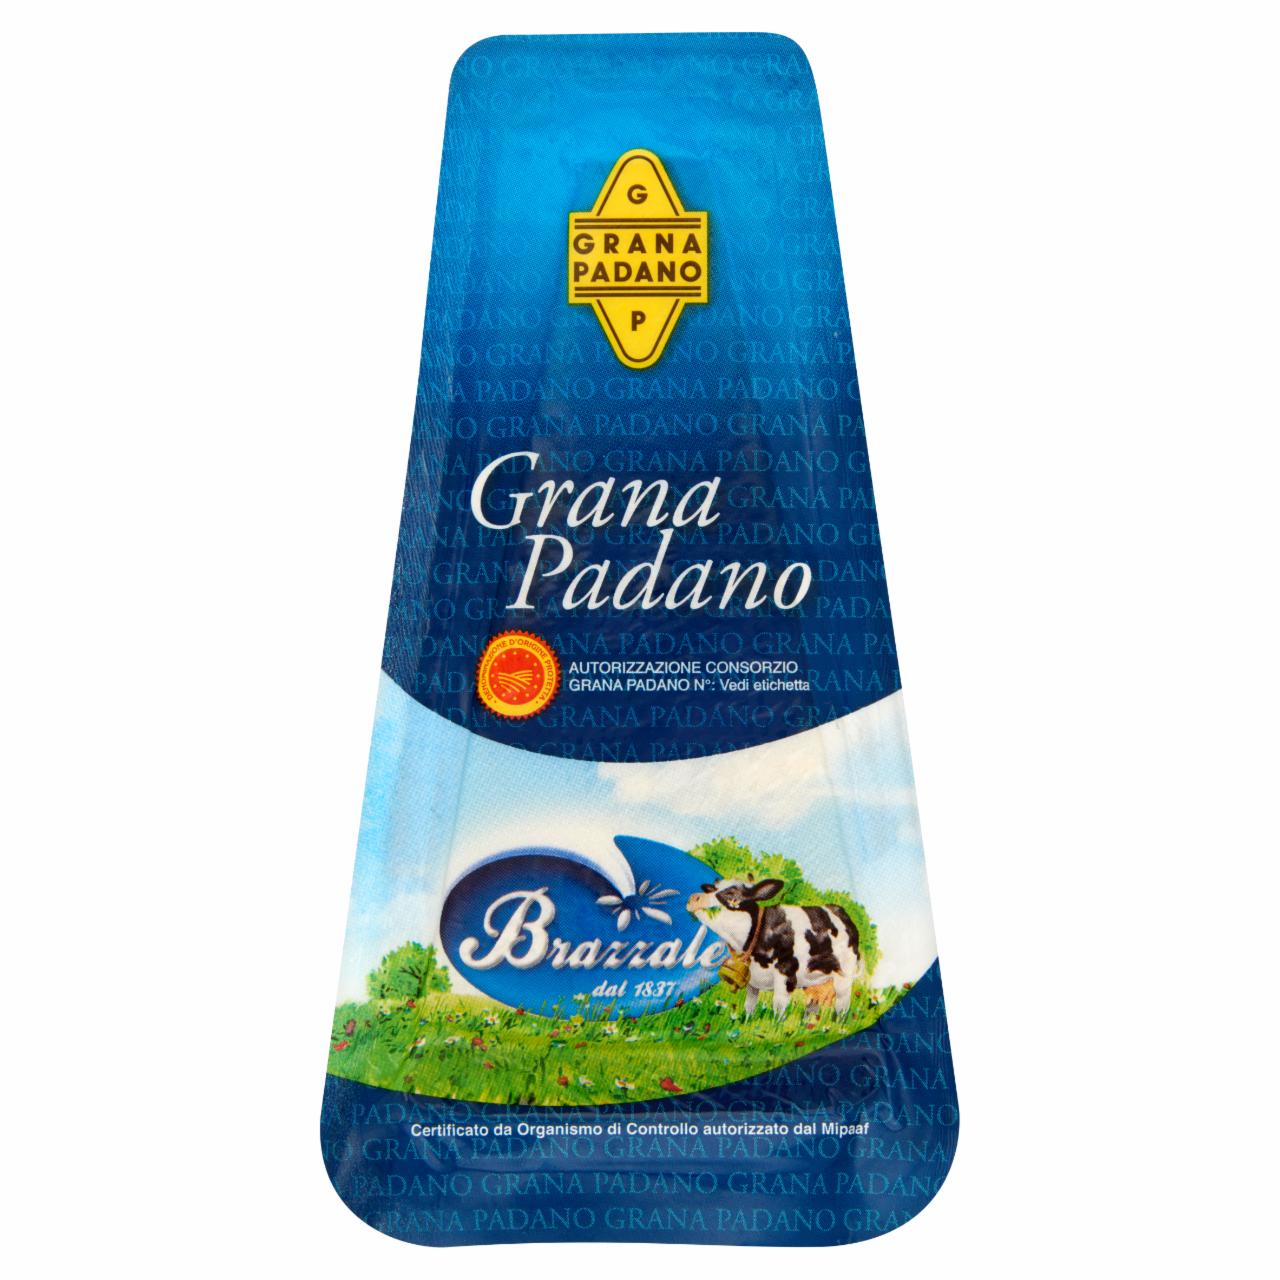 Képek - Brazzale Grana Padano félzsíros, kemény sajt 200 g